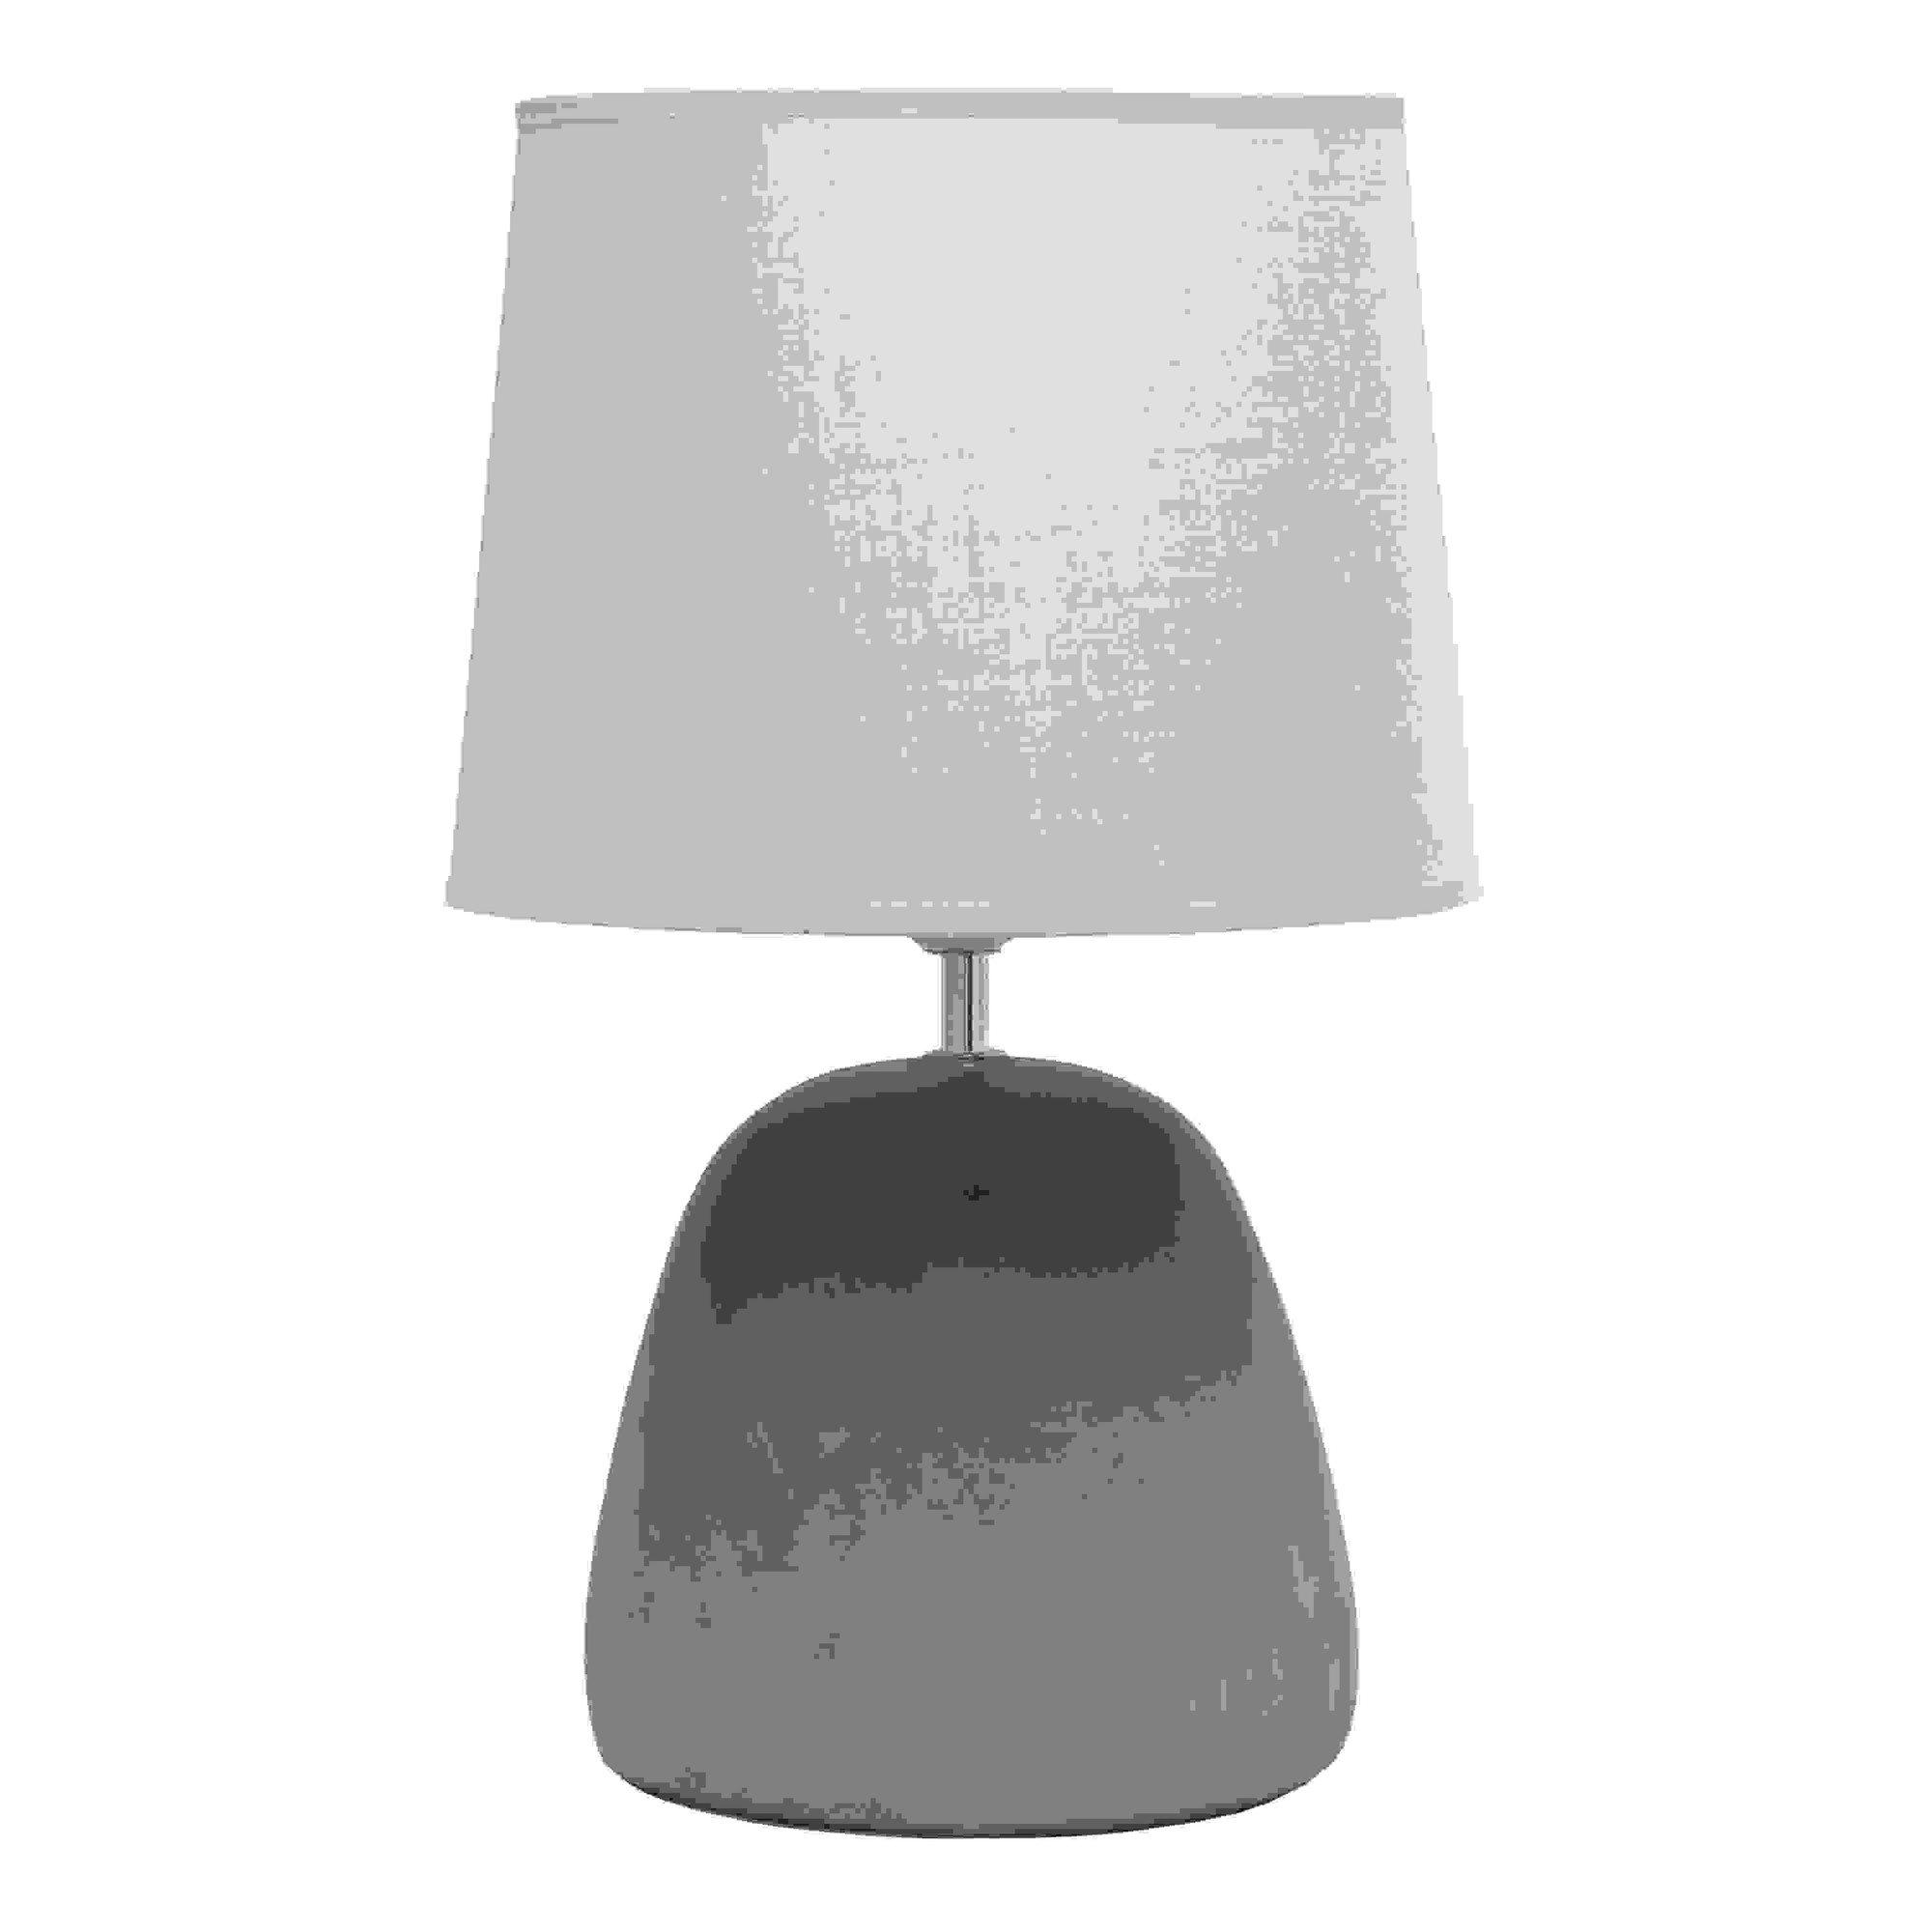 Simple Designs Round Concrete Table Lamp, Gray